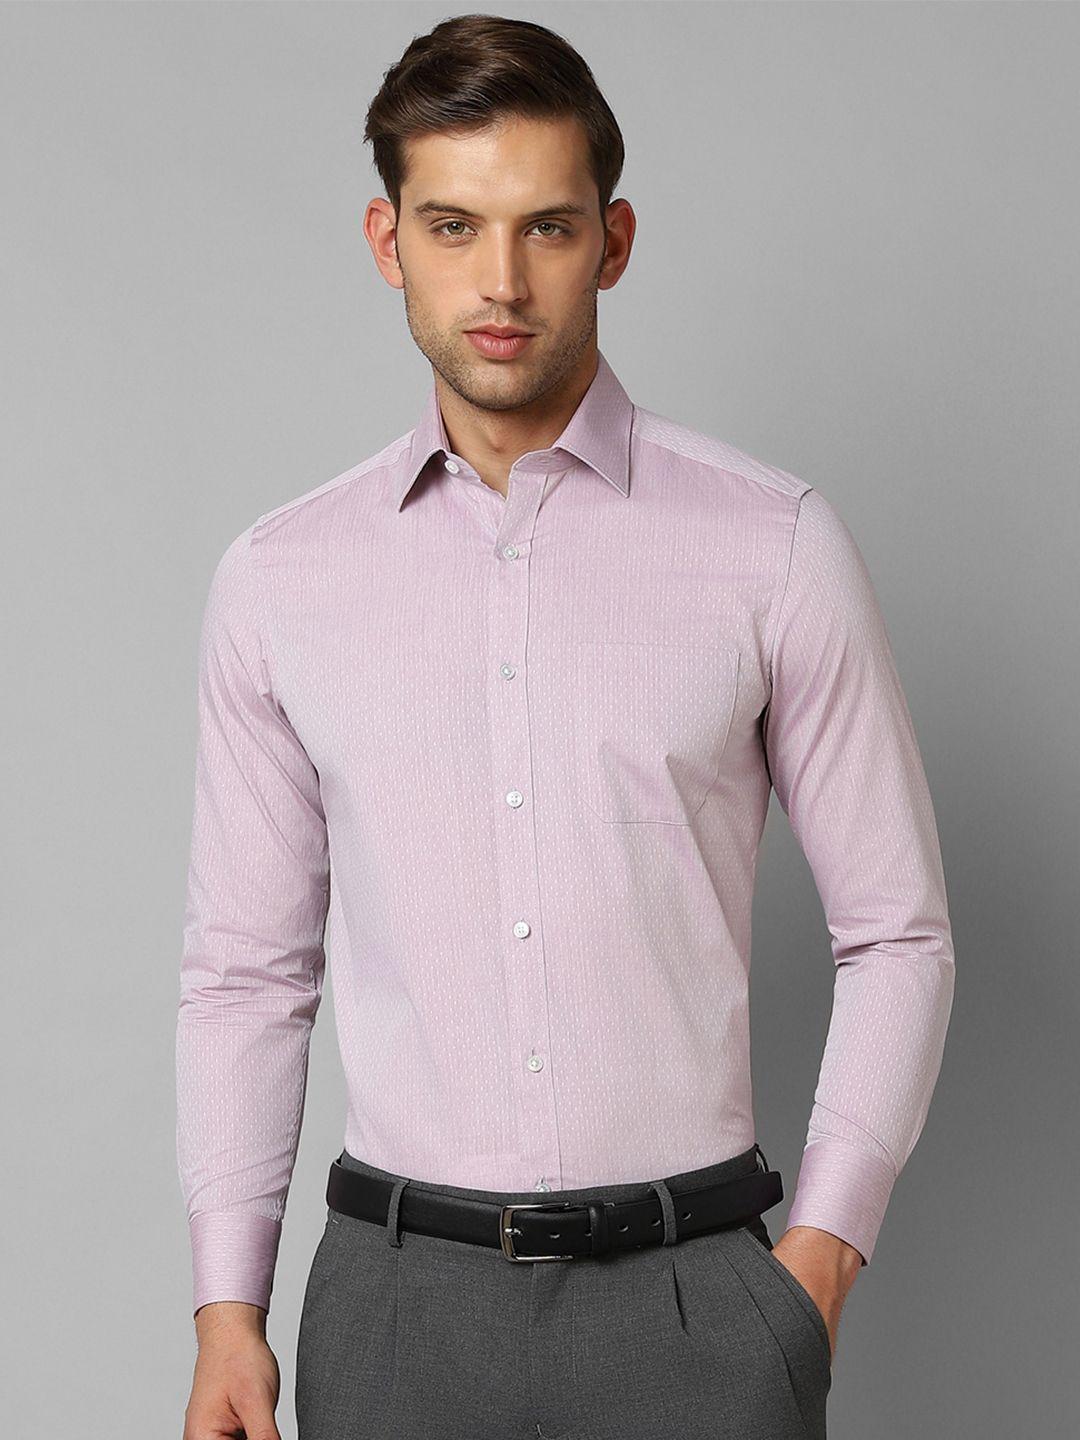 louis philippe slim fit self design pure cotton formal shirt